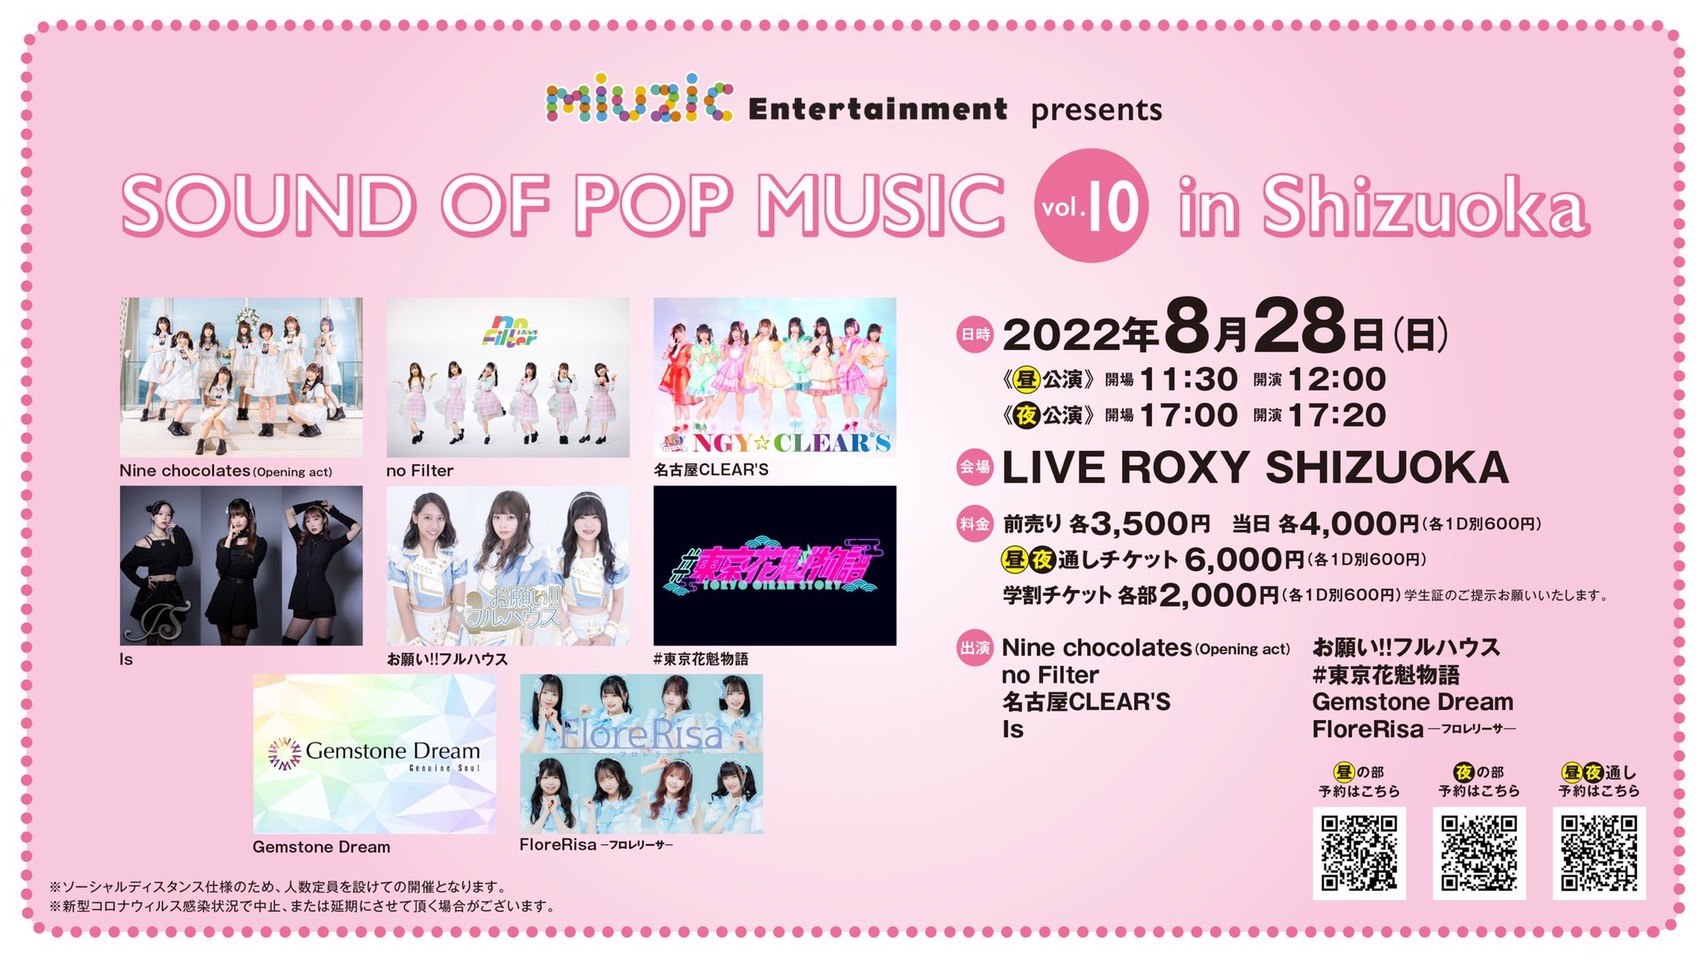 昼公演》8/28(日) miuzic Entertainment presents 「SOUND OF POP